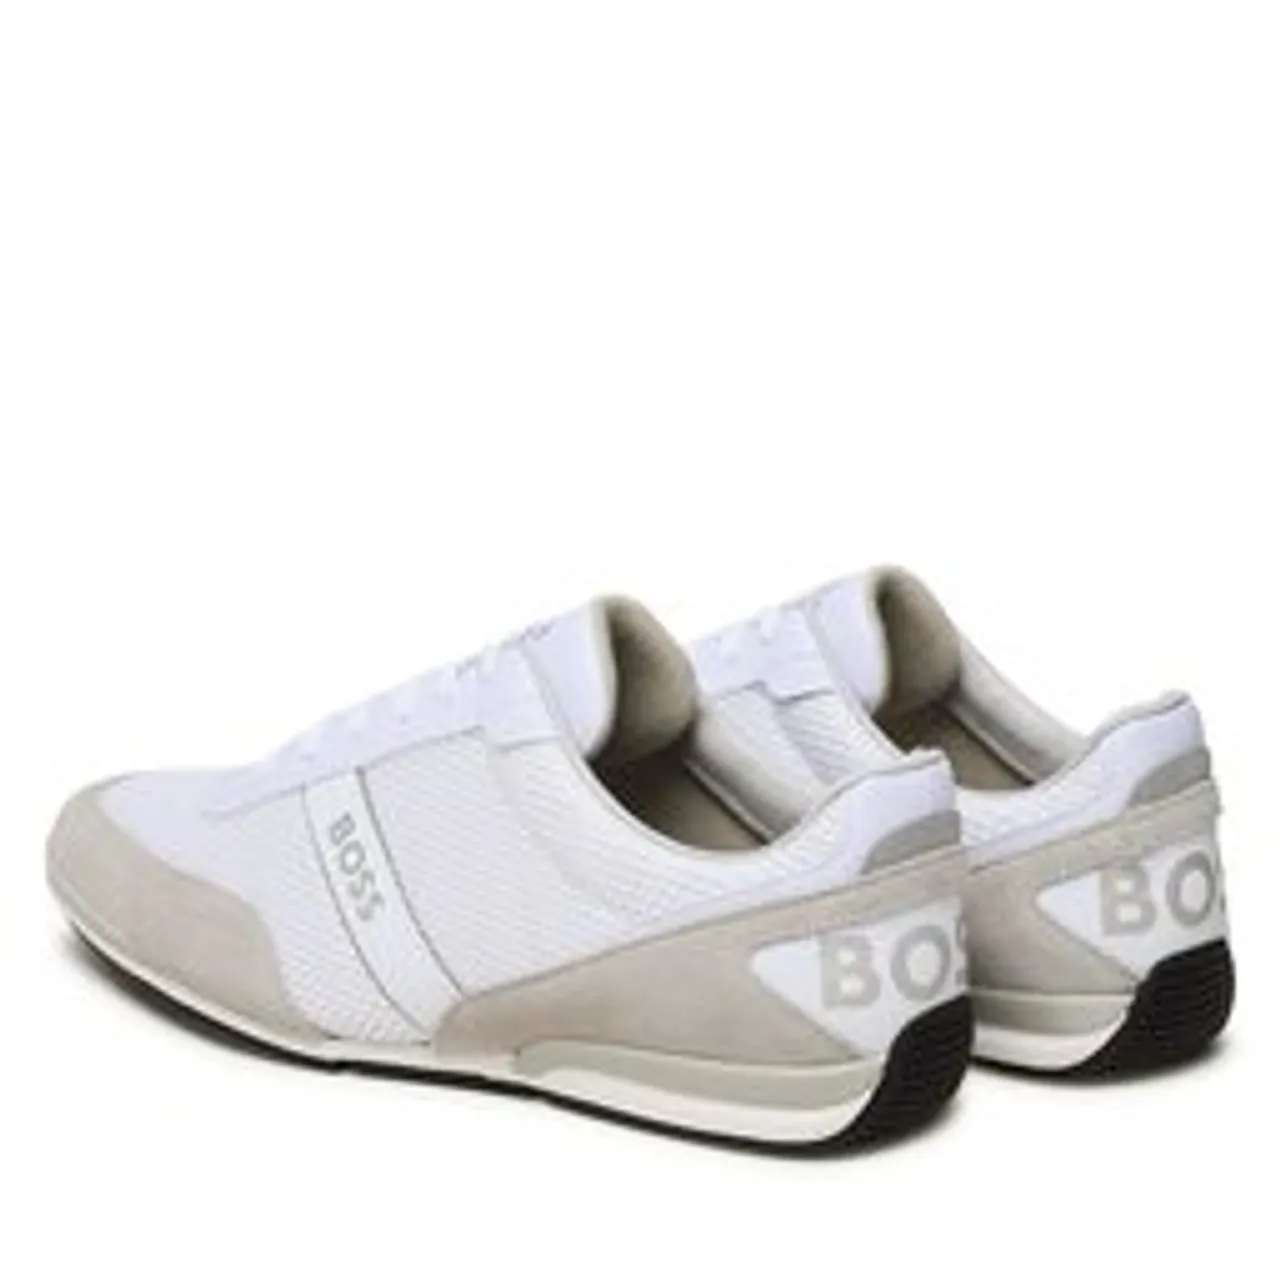 Sneakers Boss Saturn 50493233 10249971 01 White 100